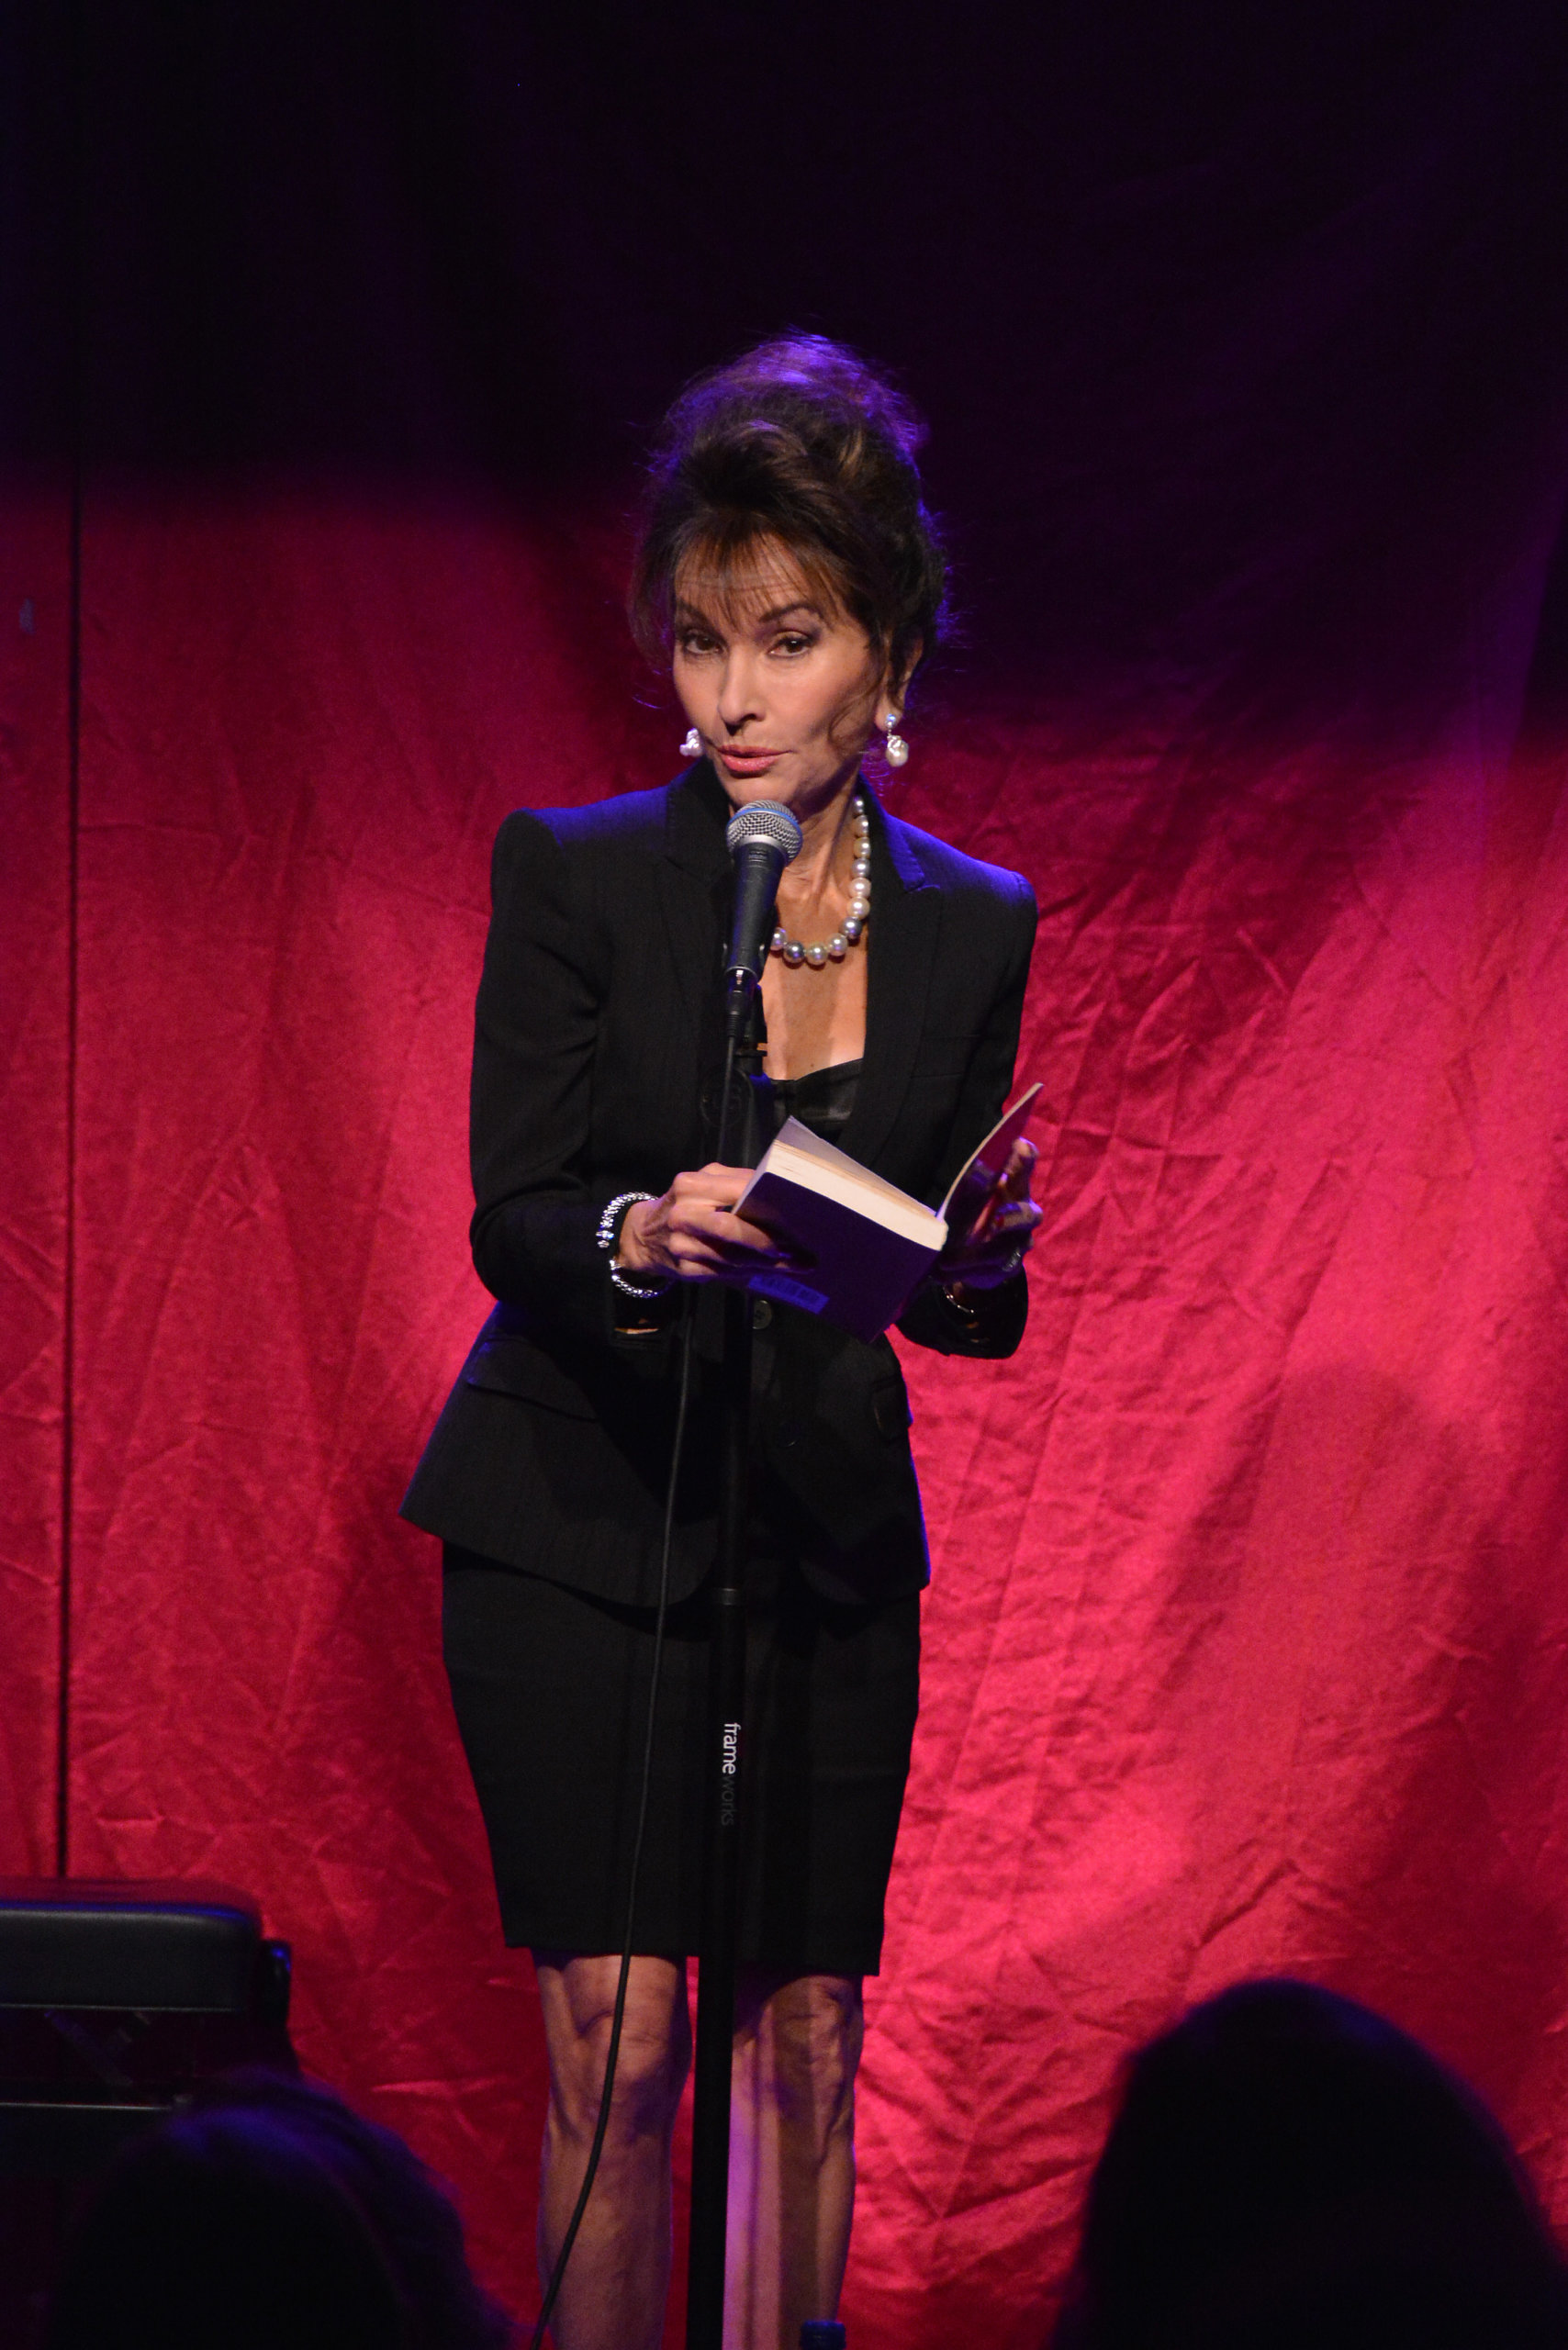 Susan Lucci performs Celebrity Autobiography